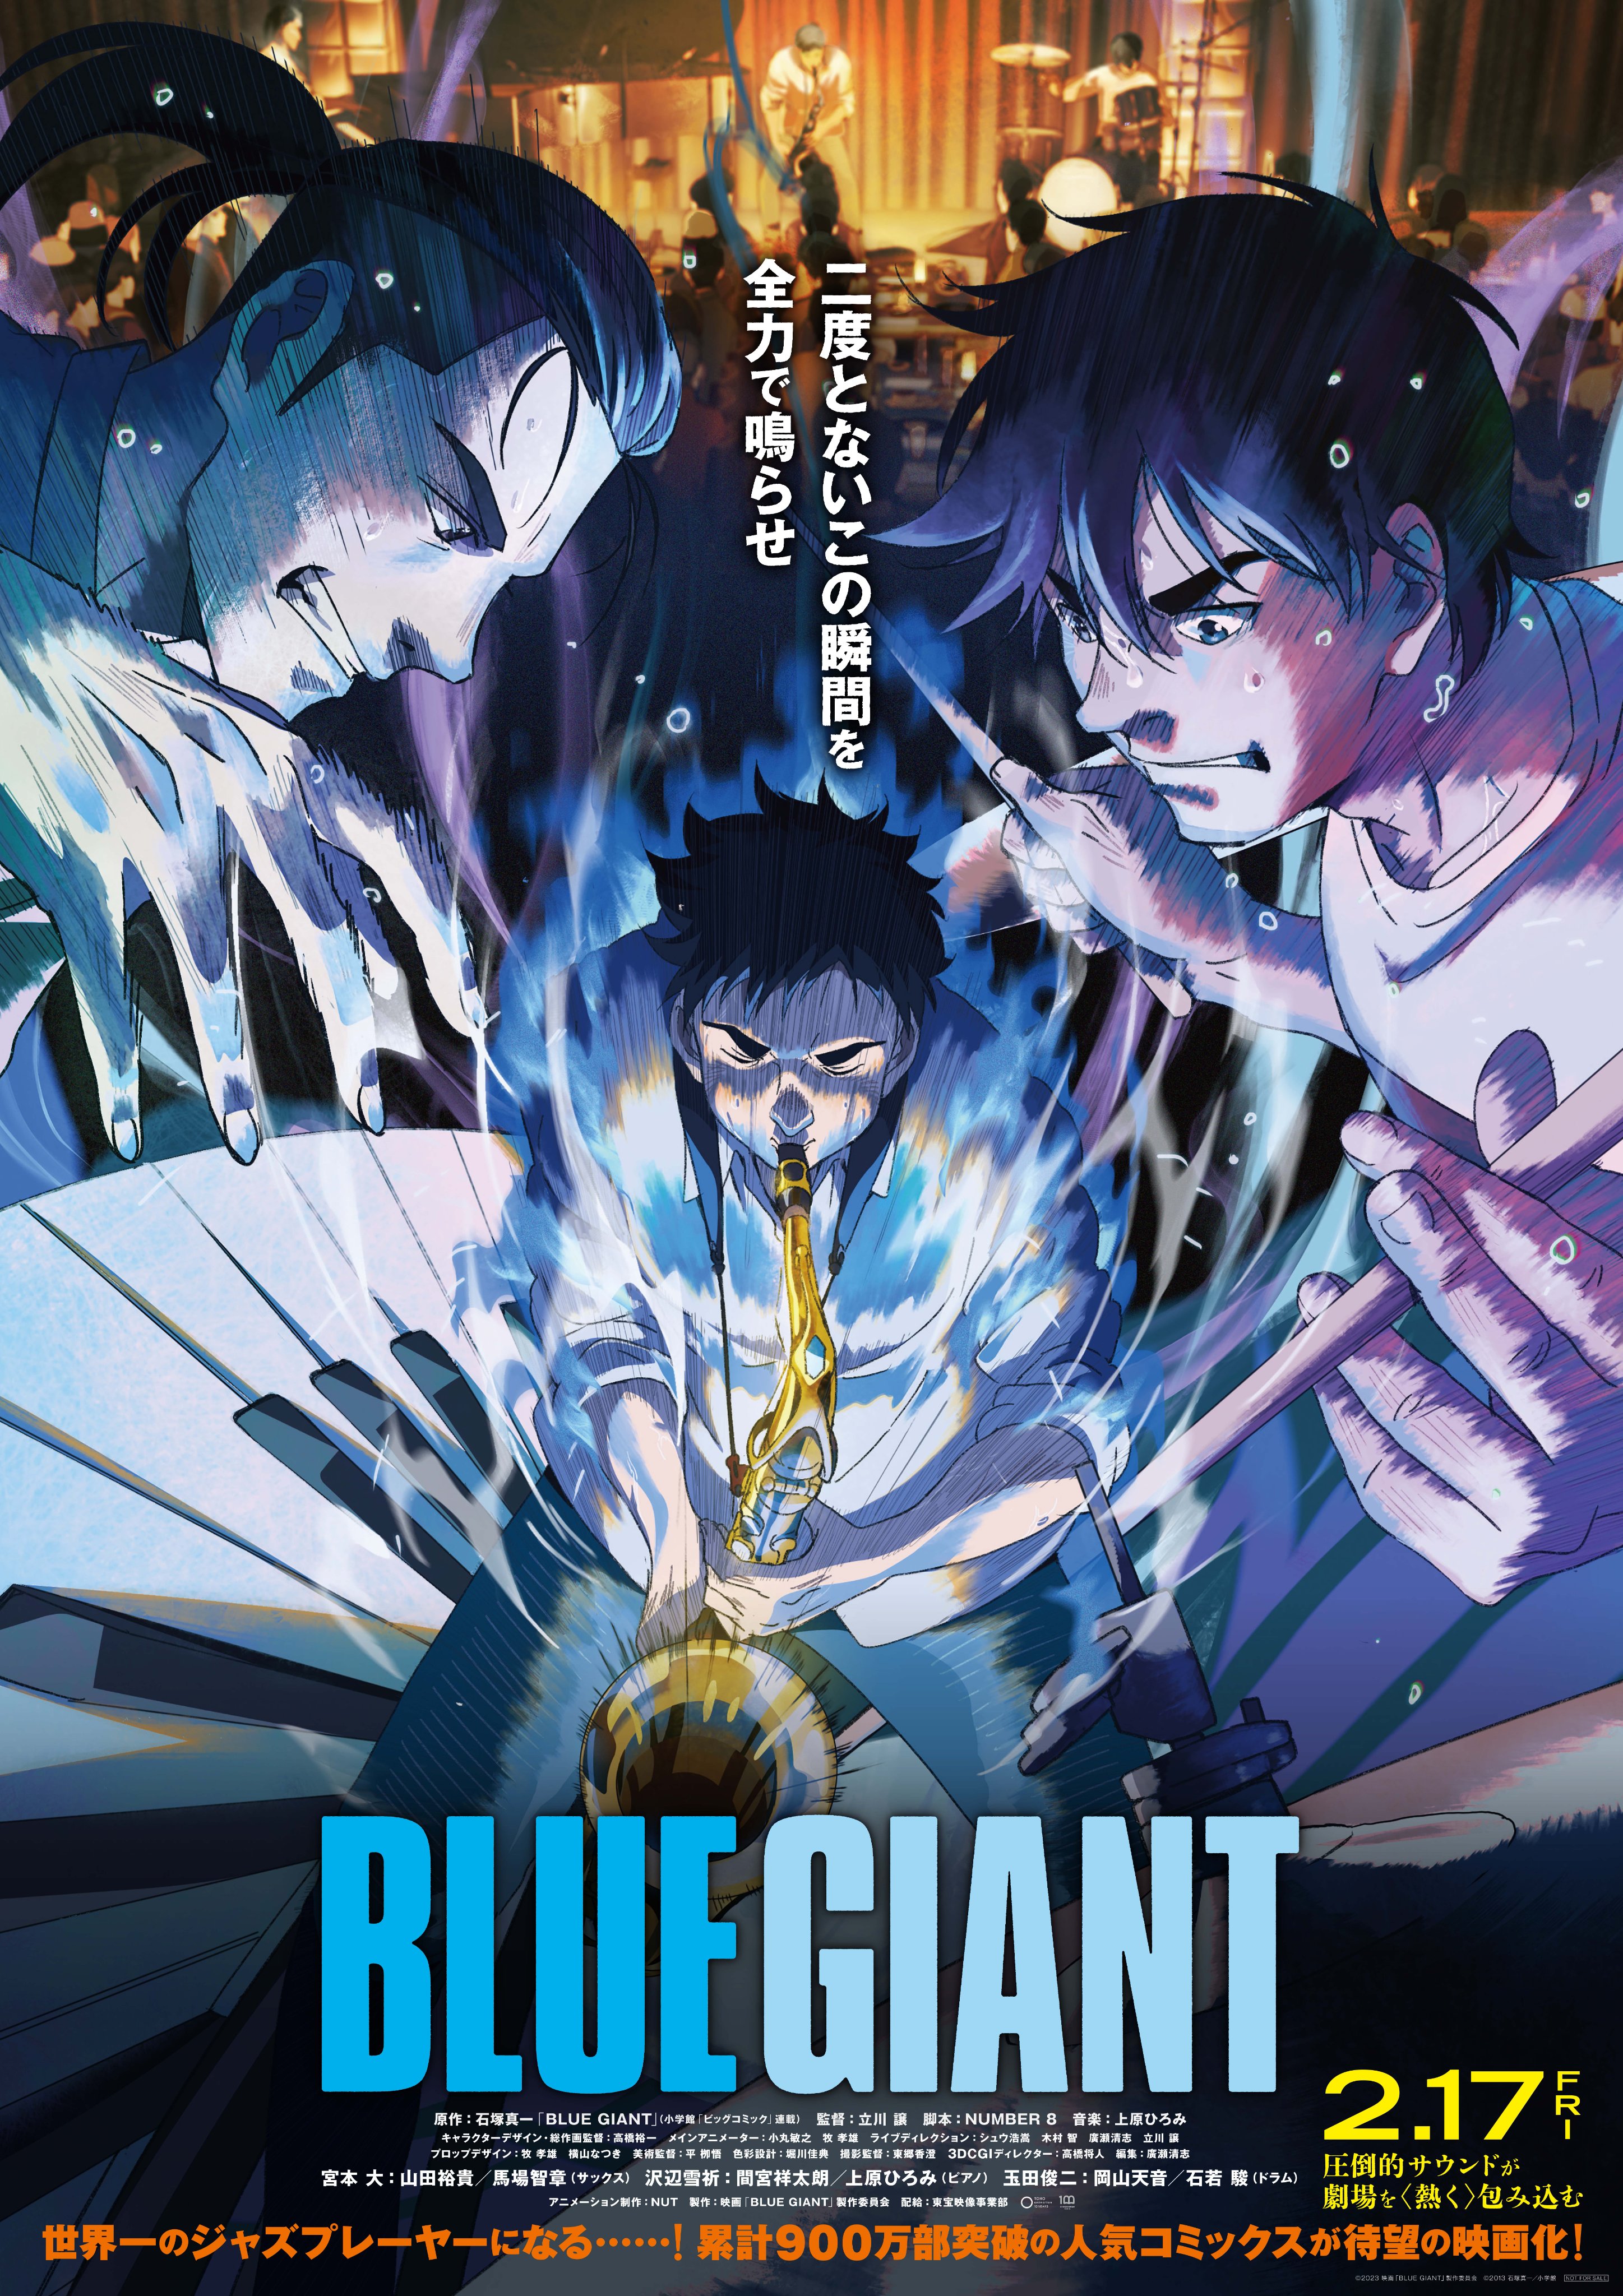 BLUE GIANT 公式アカウント (@bluegiant_bc) / Twitter